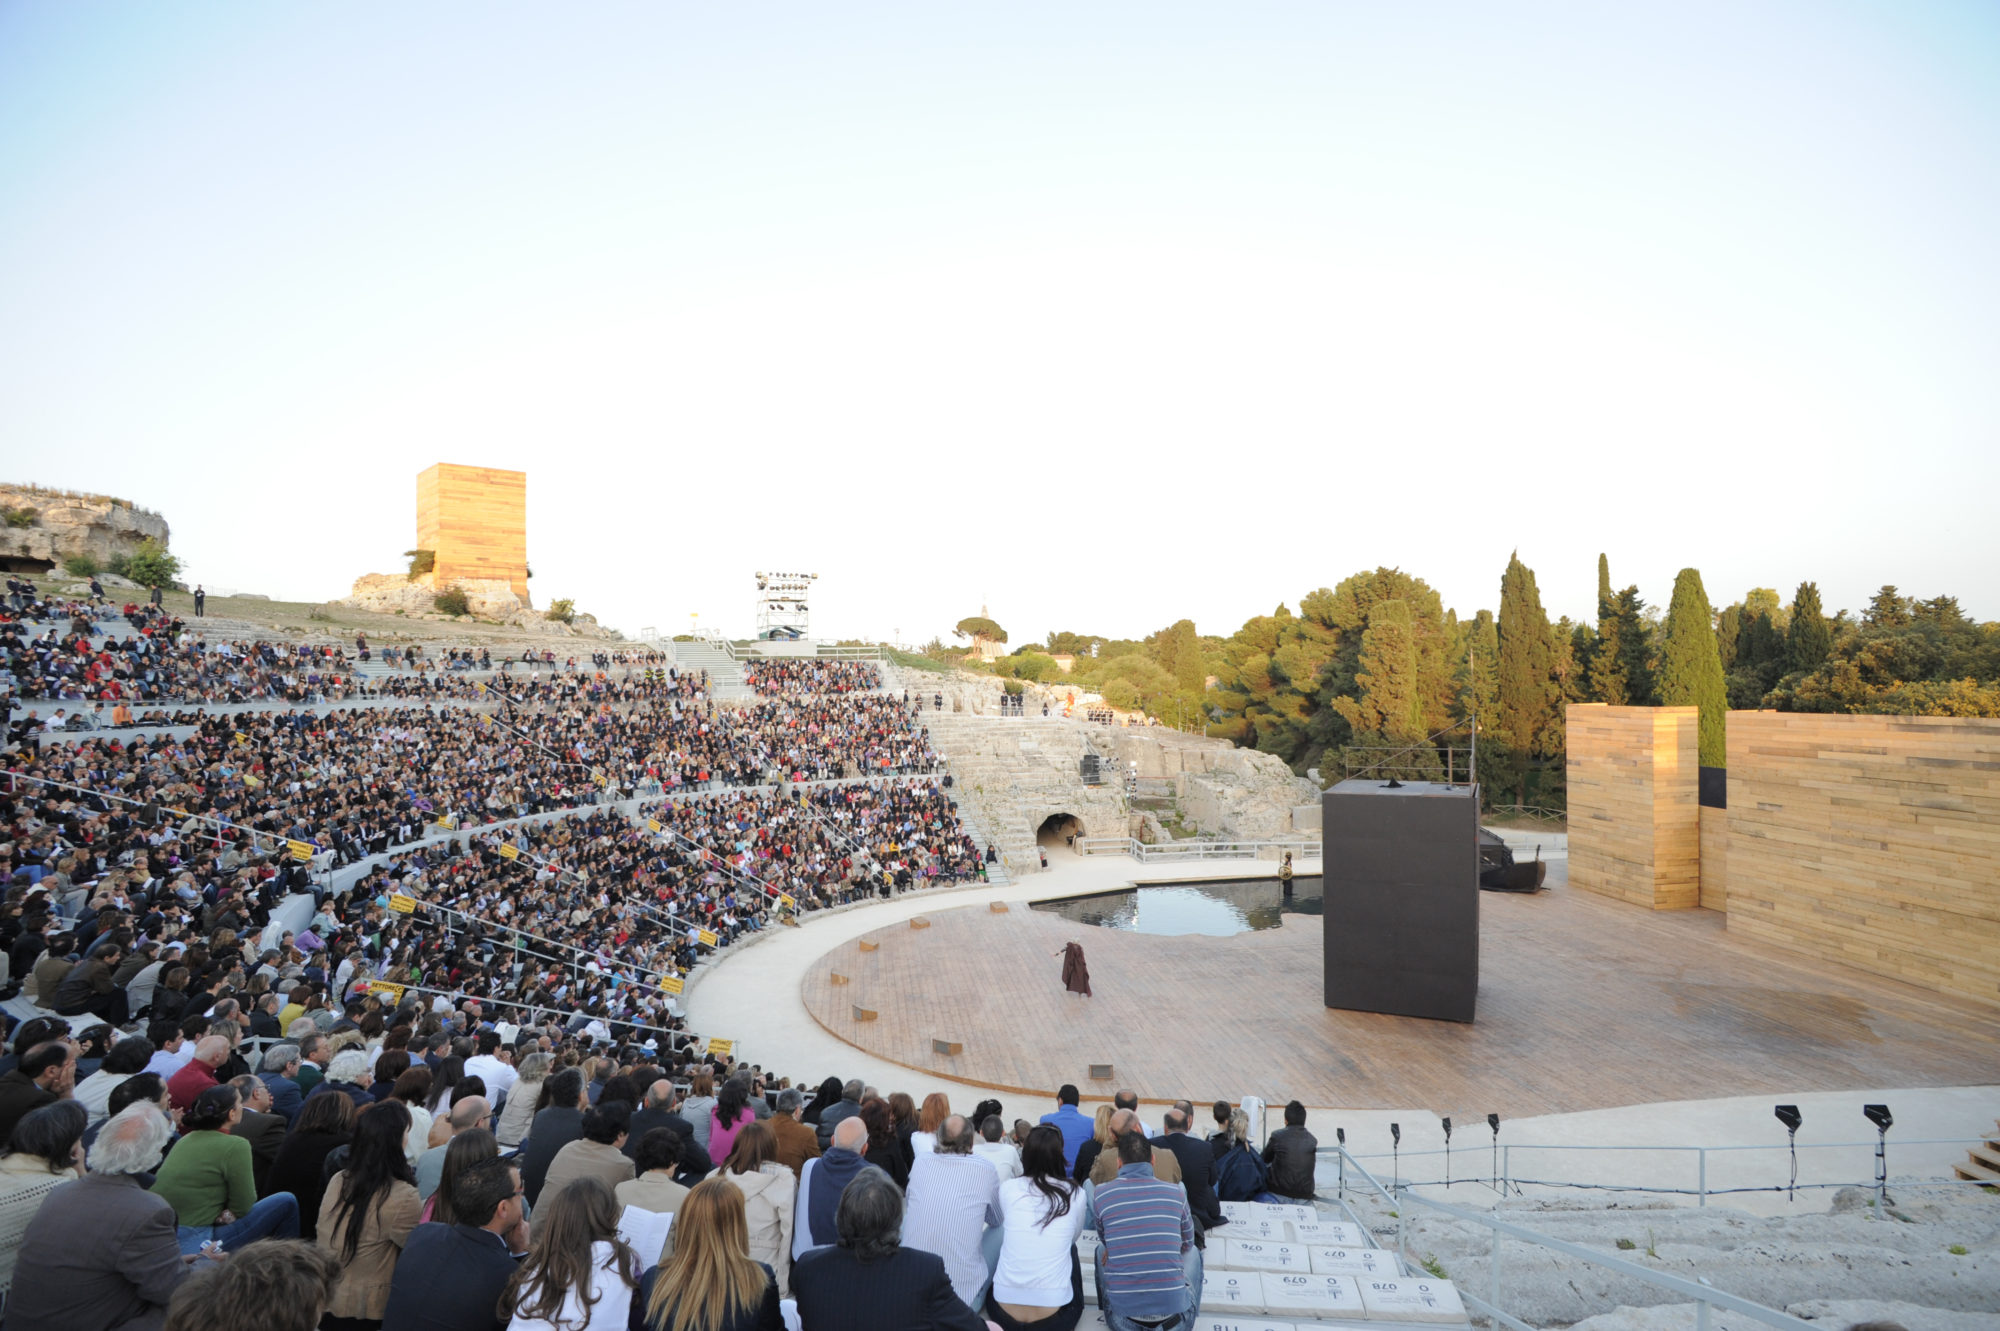 Stage designs for the Greek Theater of Syracusa - Garcés - de Seta - Bonet